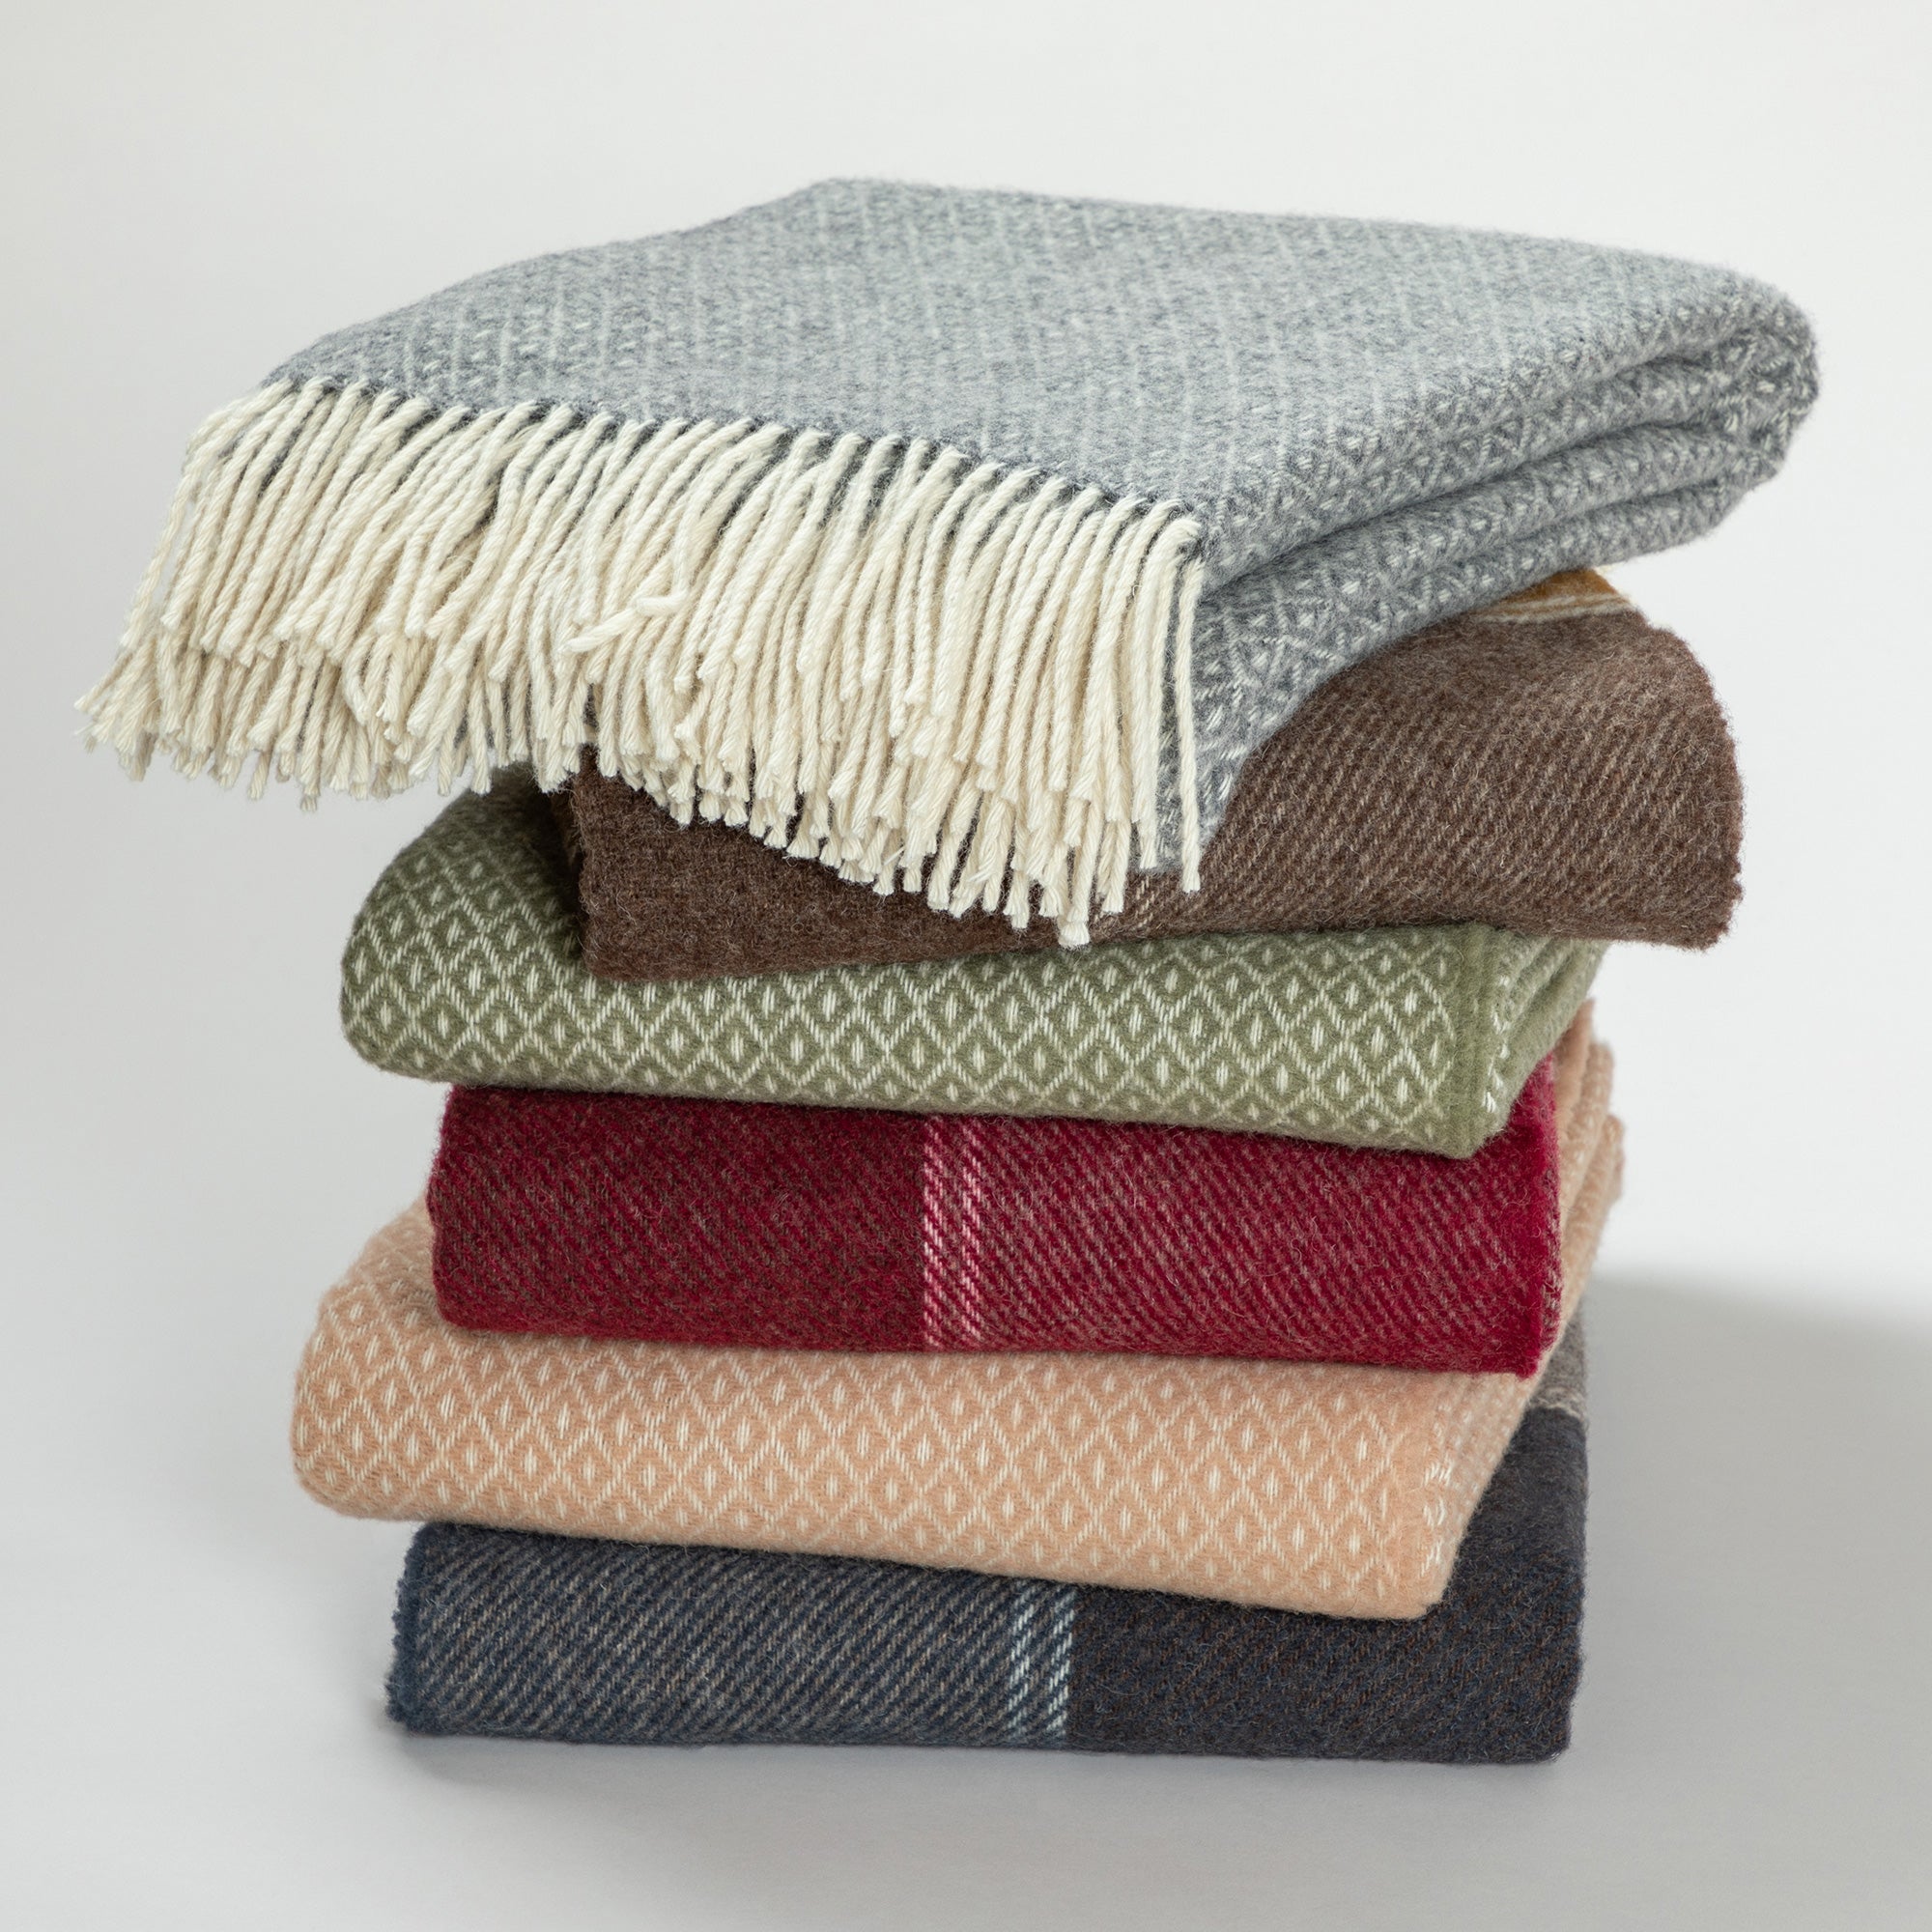 Ukrainian 100% Wool Fringed Throw Blanket - Plaid - Wild Dove Gray